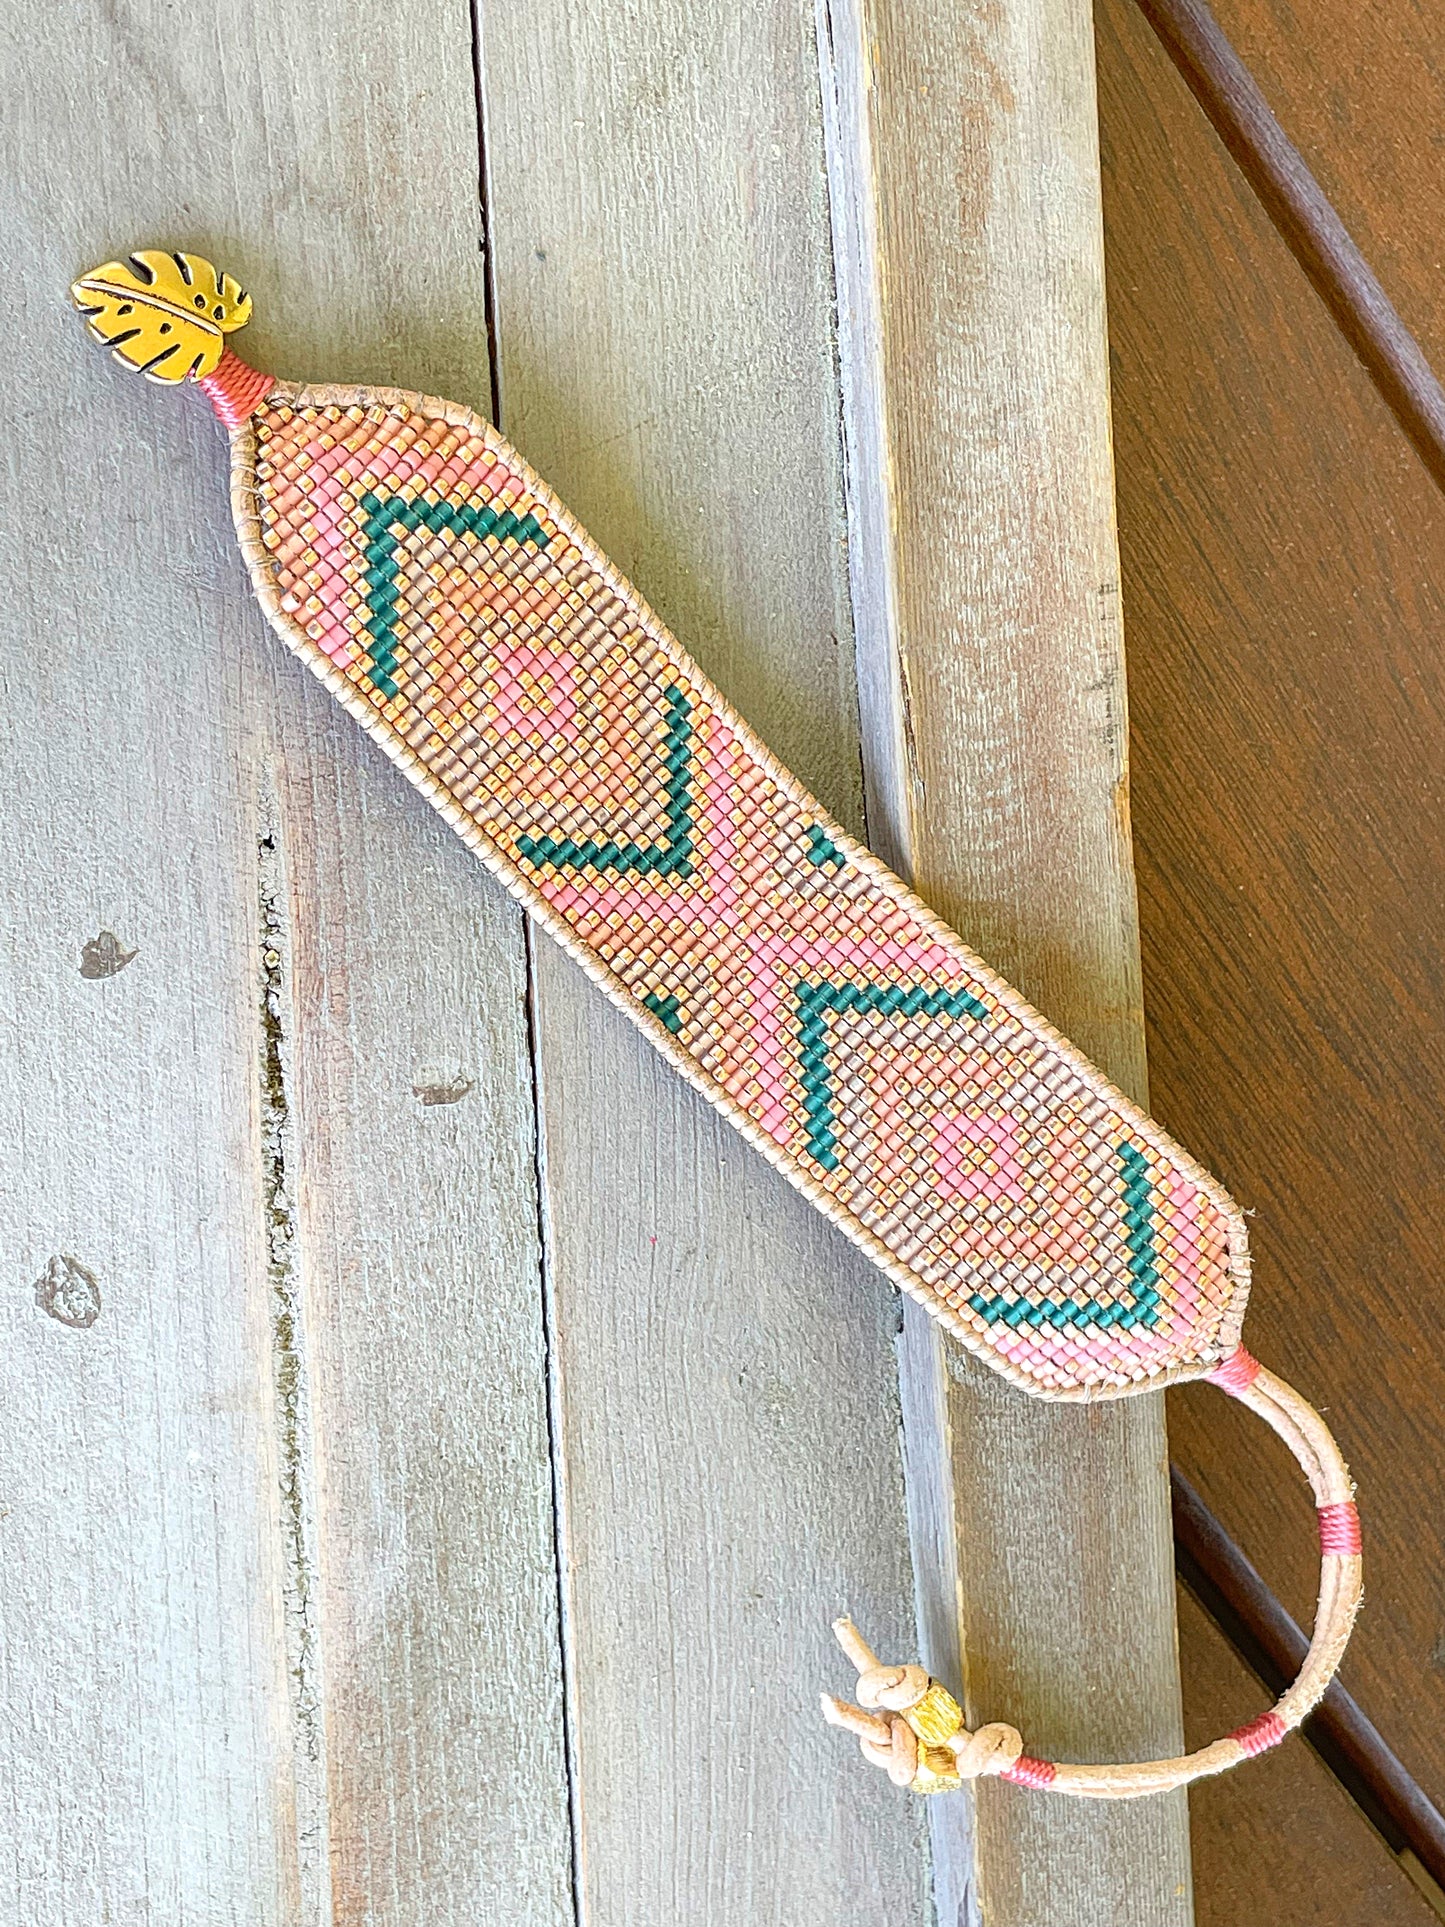 Gold, Tan, Teal, Peach, and Pink Geometric Bead Loom Woven Bracelet